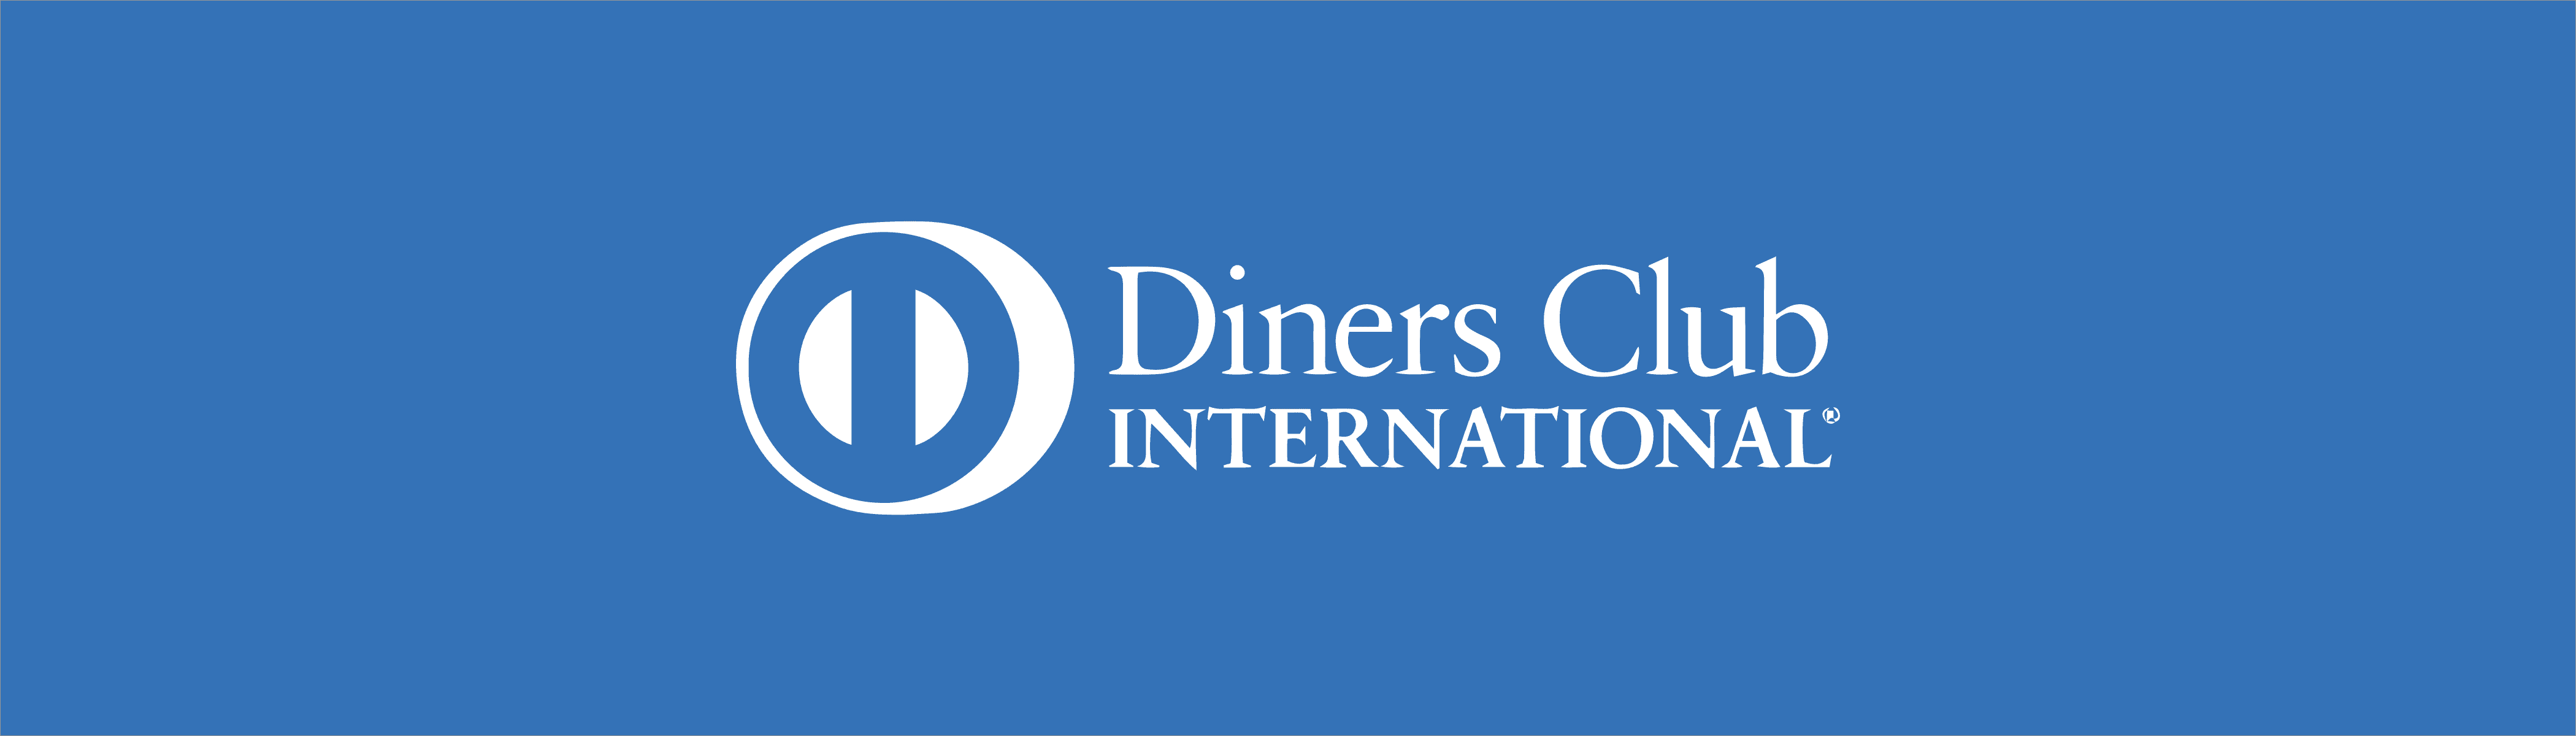 logo diners club spain